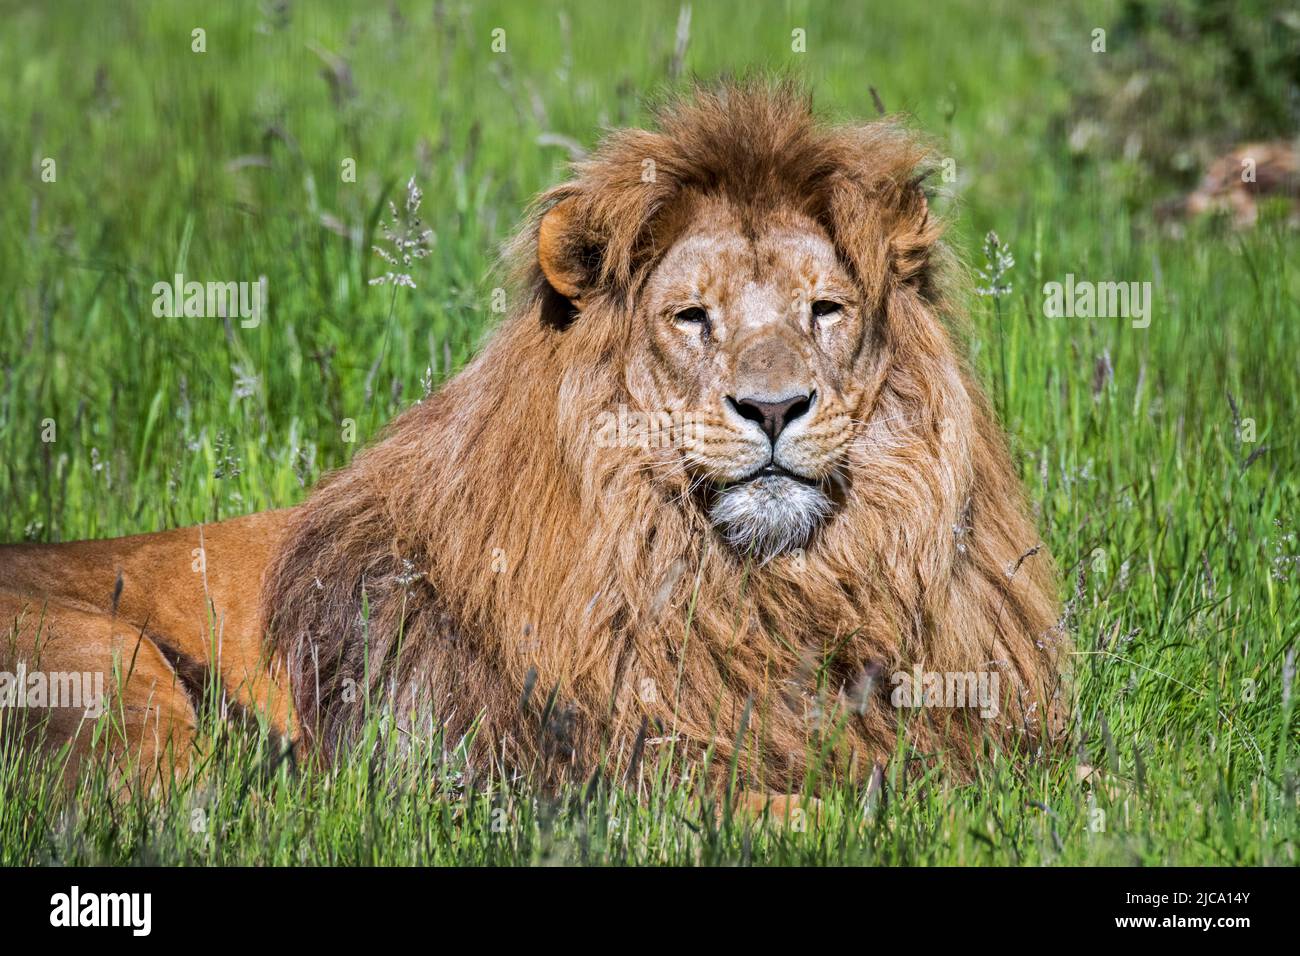 Southern lion  / Southern African lion / Katanga lion (Panthera leo melanochaita / Felis leo bleyenberghi) male, native to Southern and East Africa Stock Photo